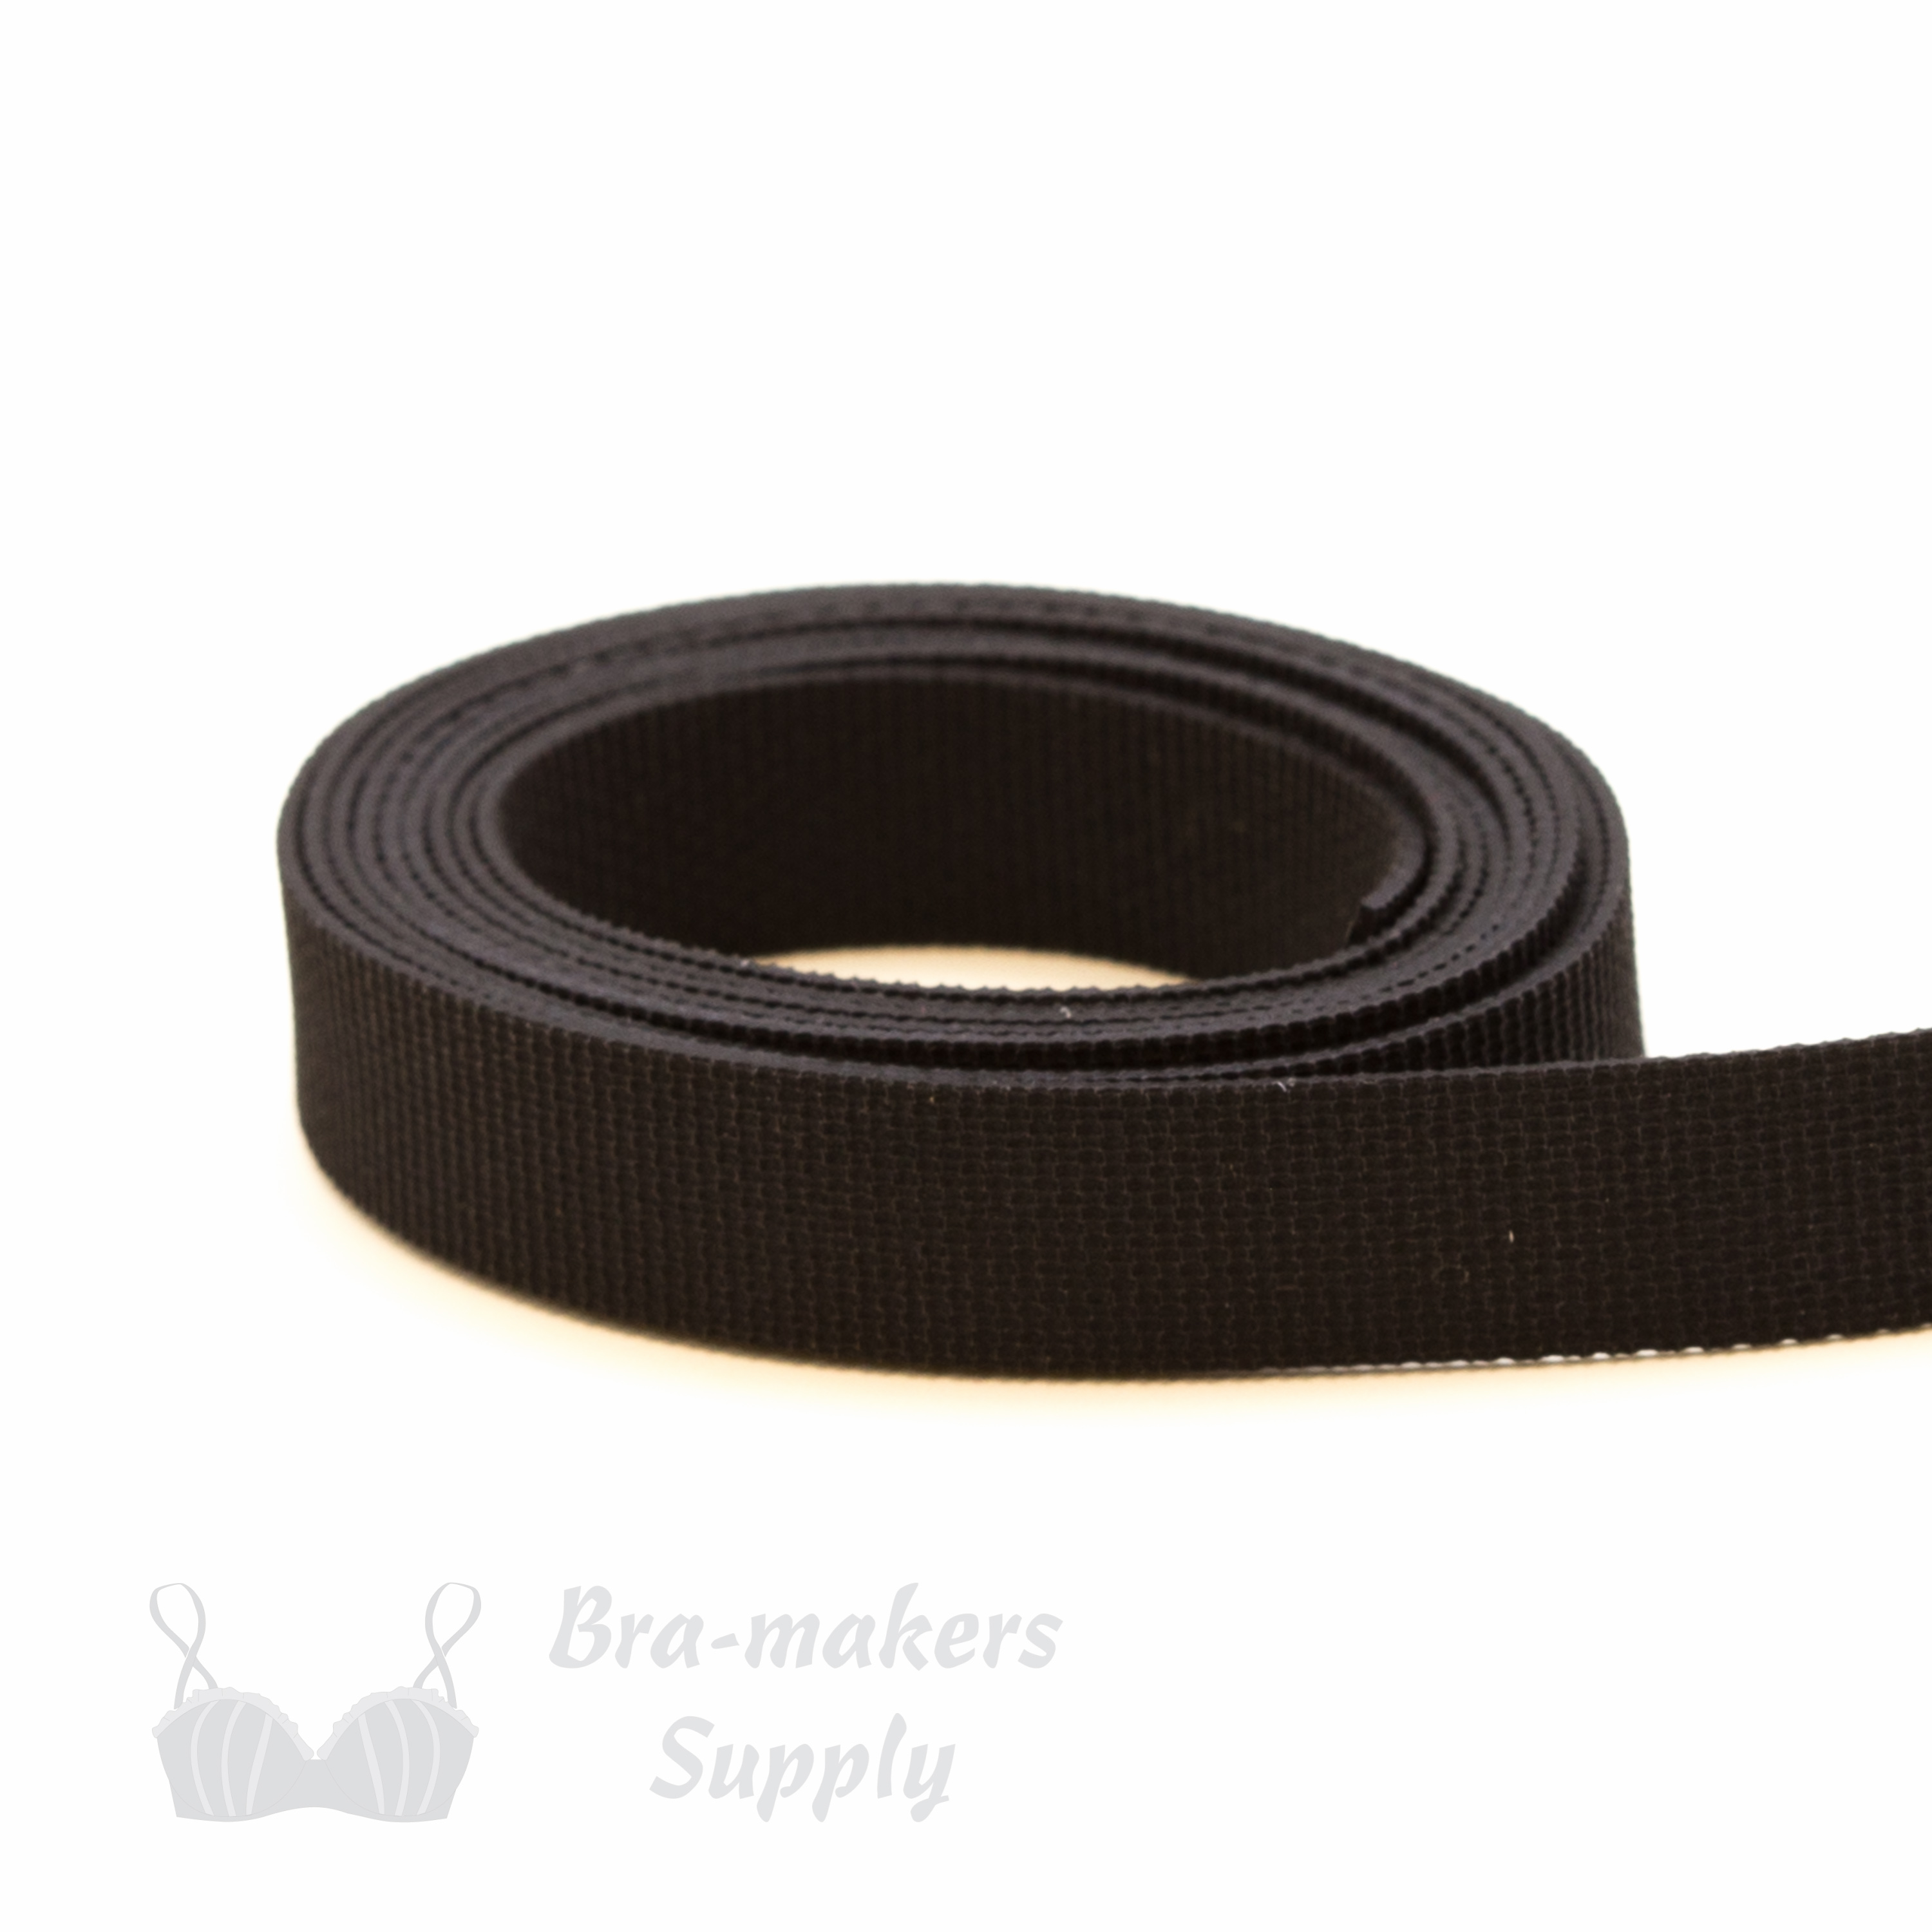 filpar rubber elastic swimwear elastic ETS-9 black from Bra-Makers Supply 1 metre roll shown